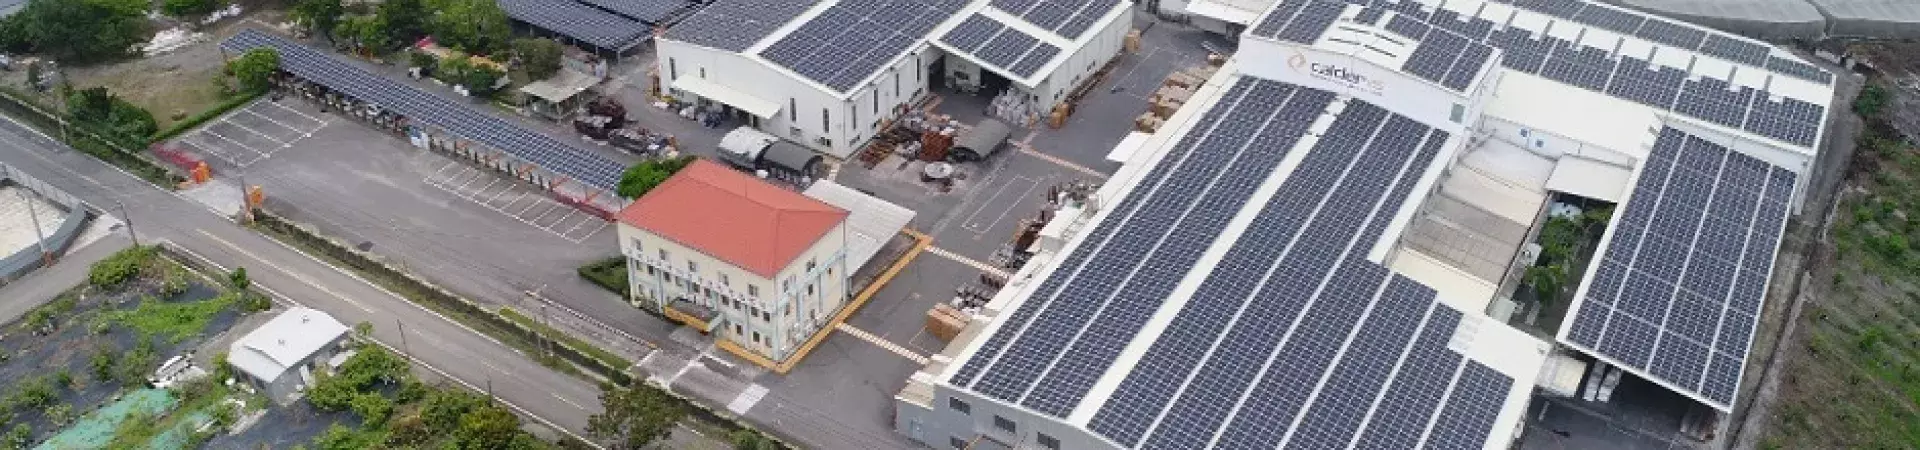 Solar panels at Calderys plant in Taiwan